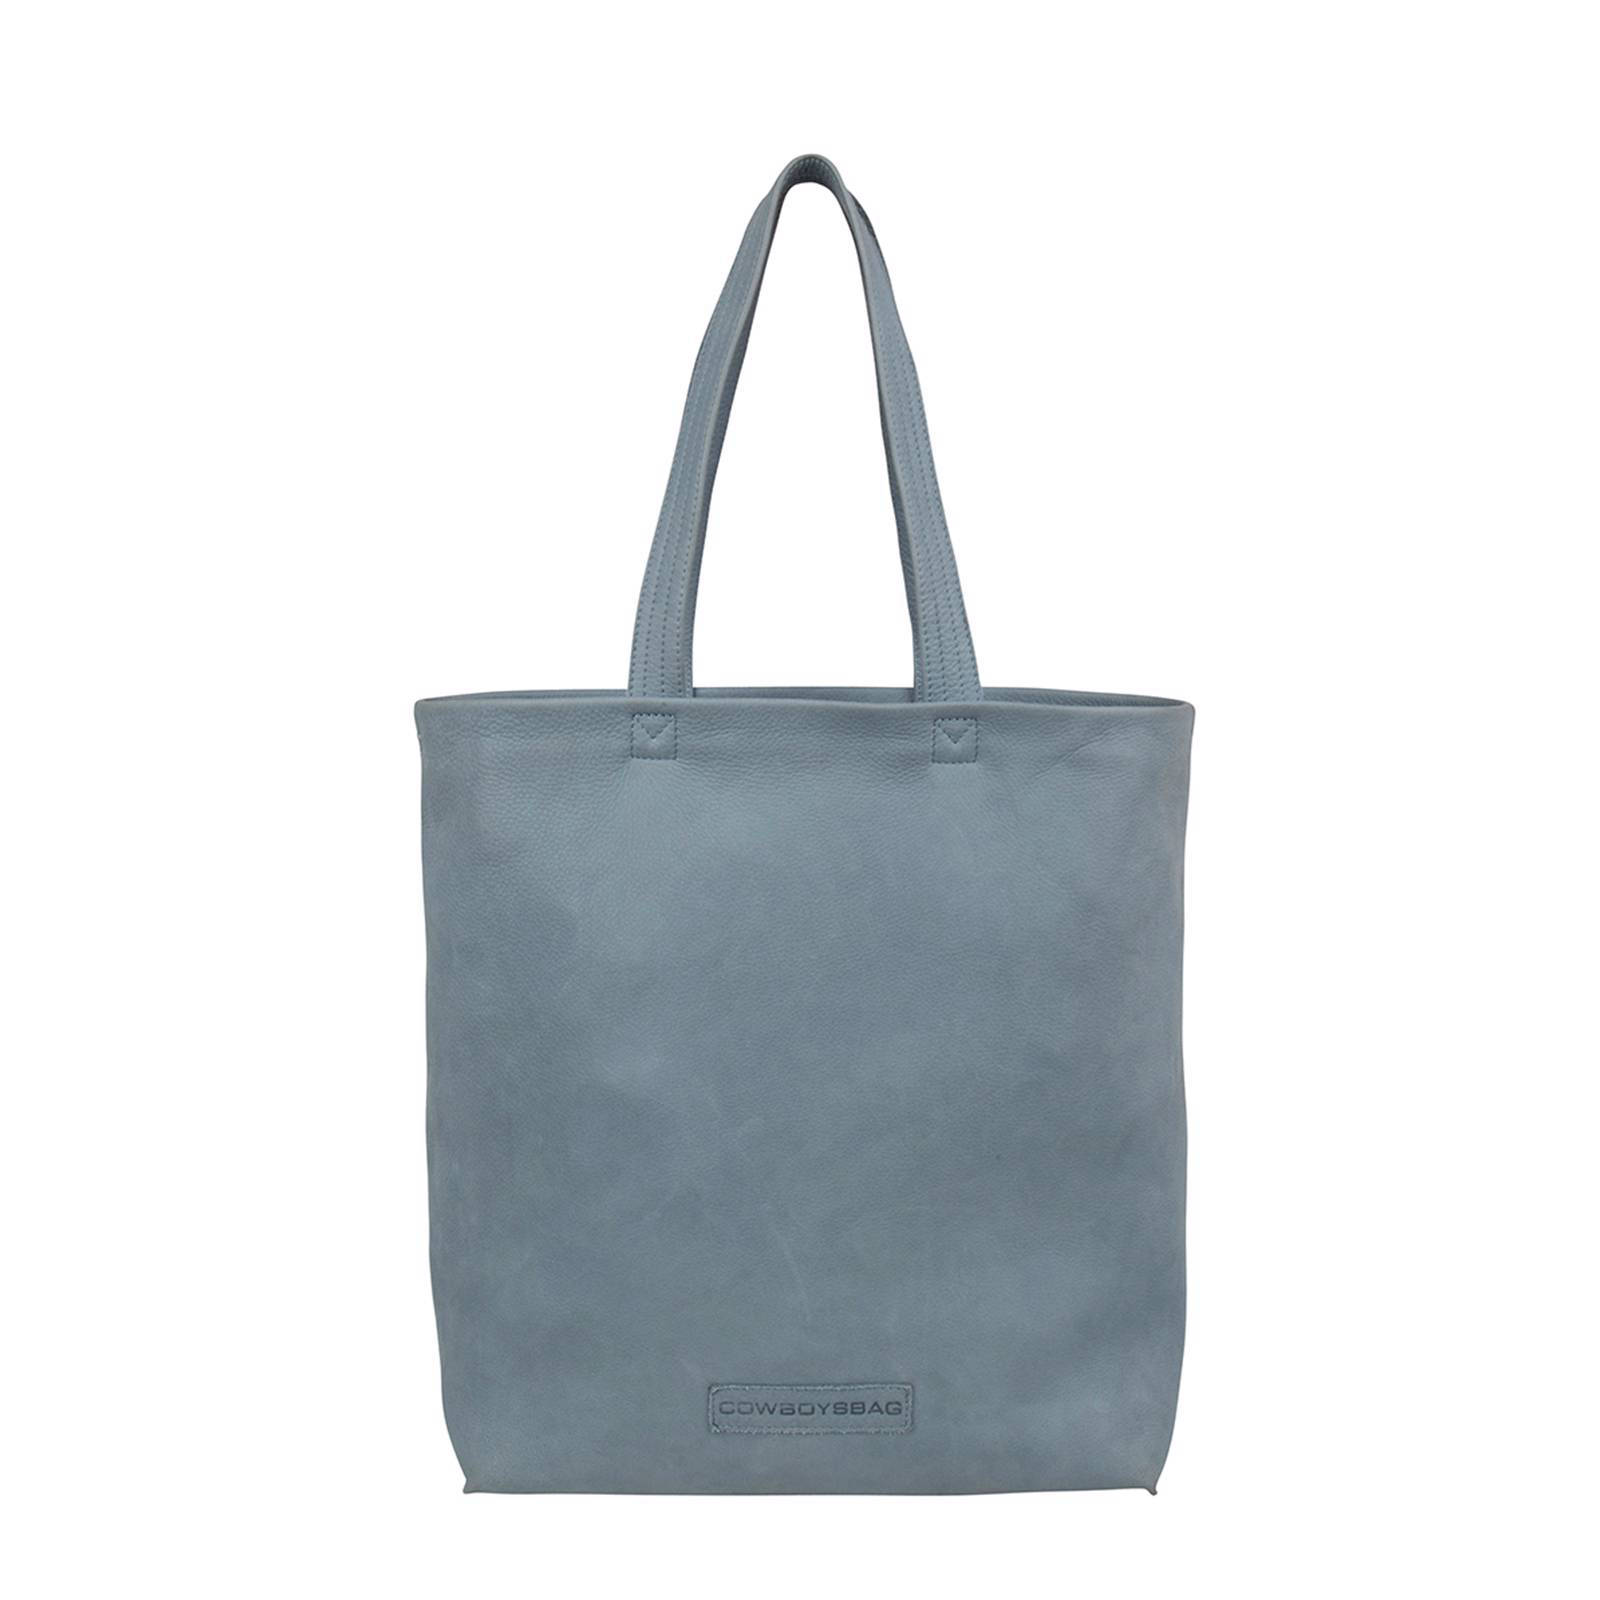 Cowboysbag Bag Palmer Small Handtassen Blauw online kopen